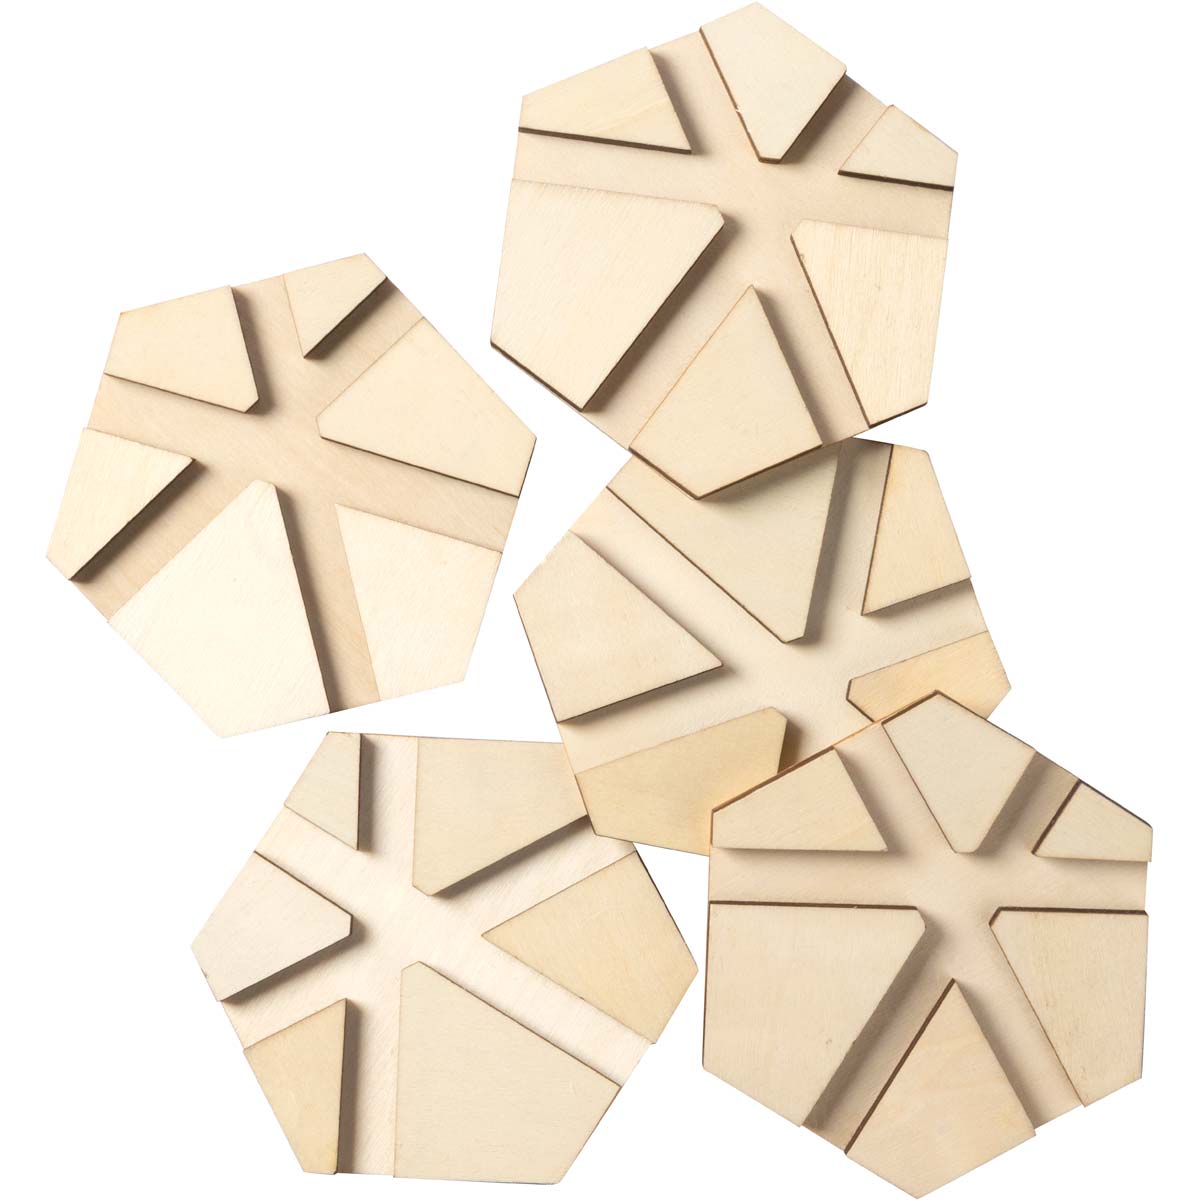 Mod Podge ® Resin Pouring Surface - Hexagon Star Coasters - 56935E